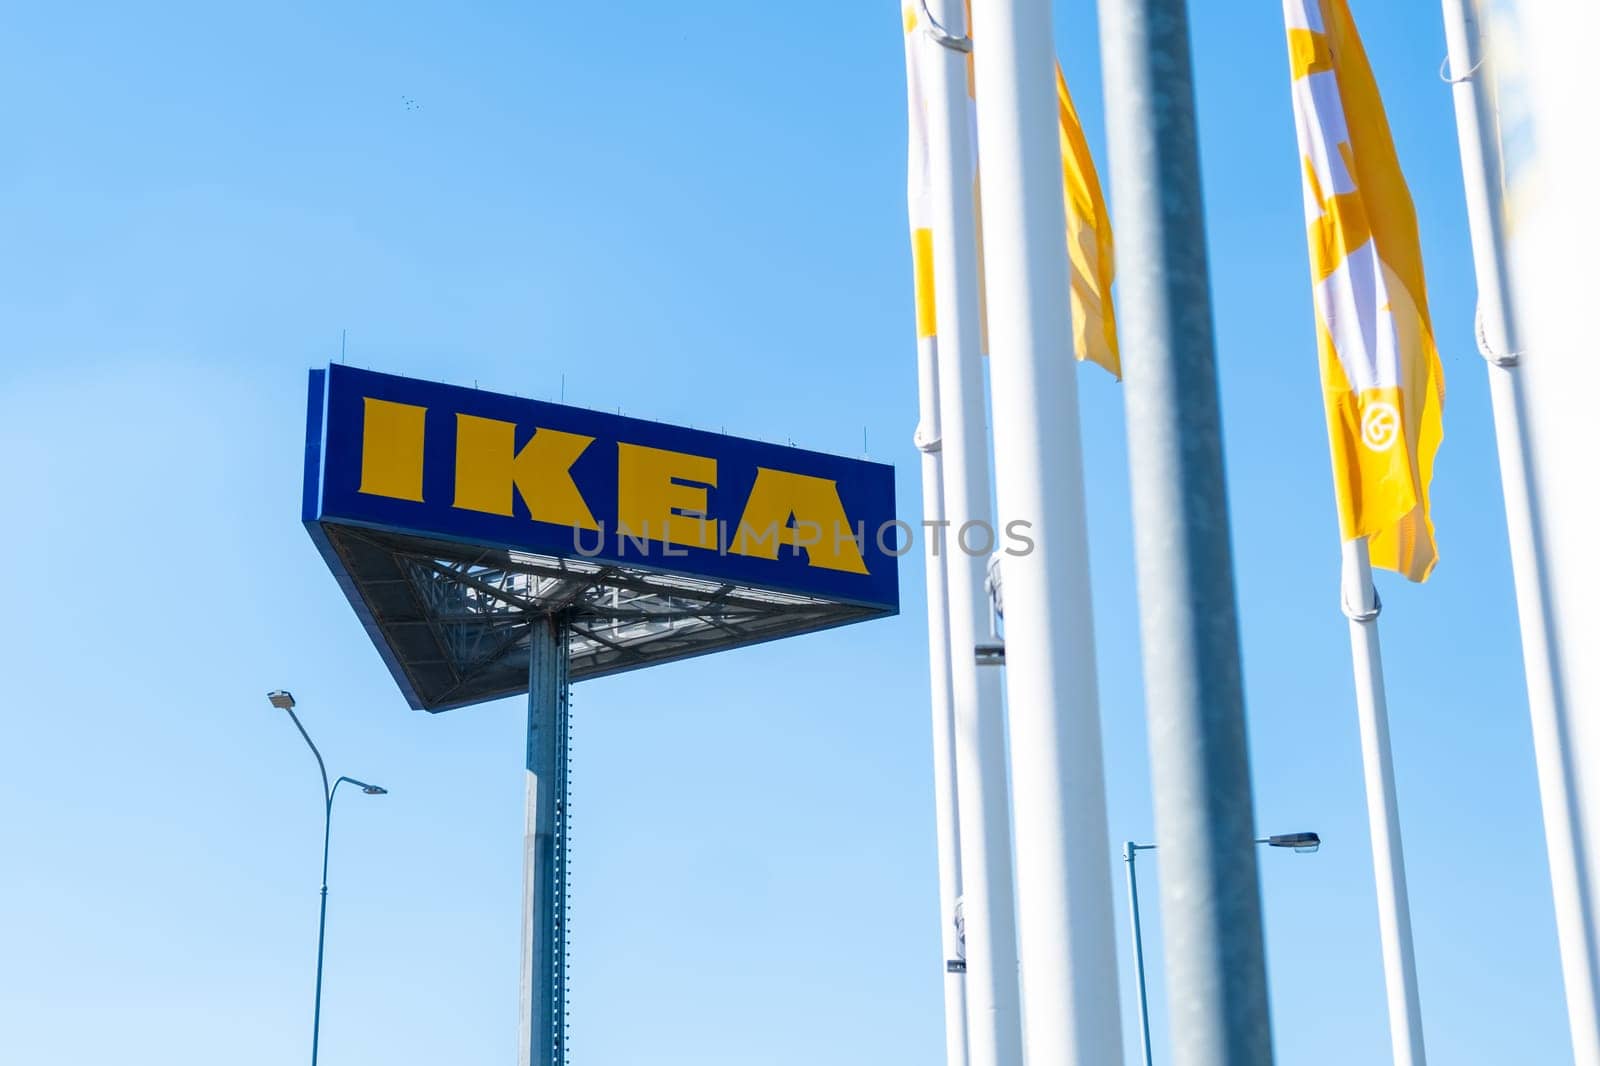 IKEA logo against blue sky and flags by vladimka